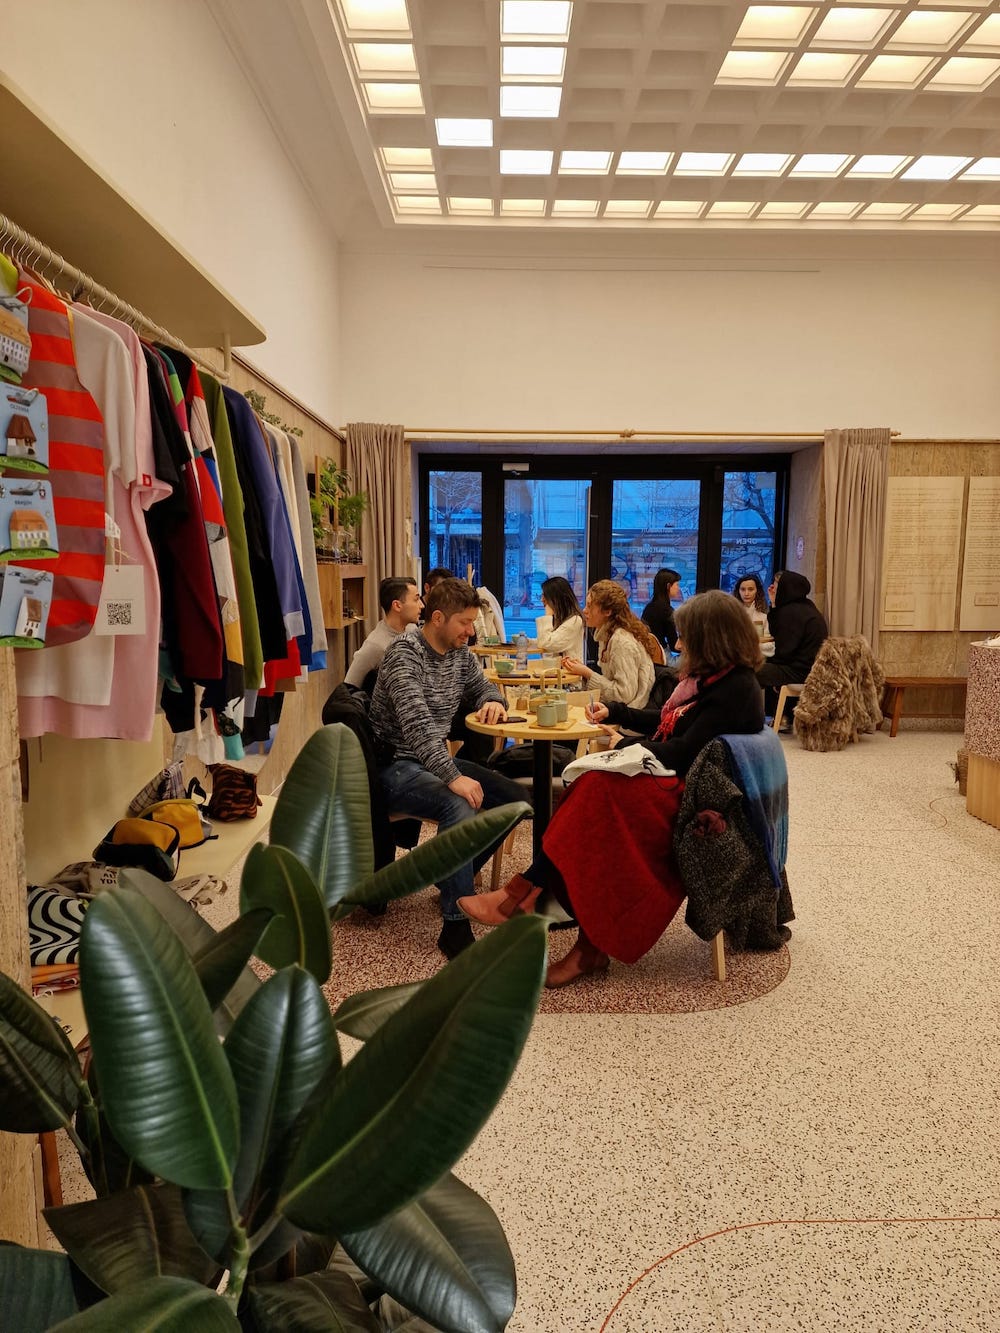 social enterprise shop Altrntv in Bucharest supports Ukrainian refugees